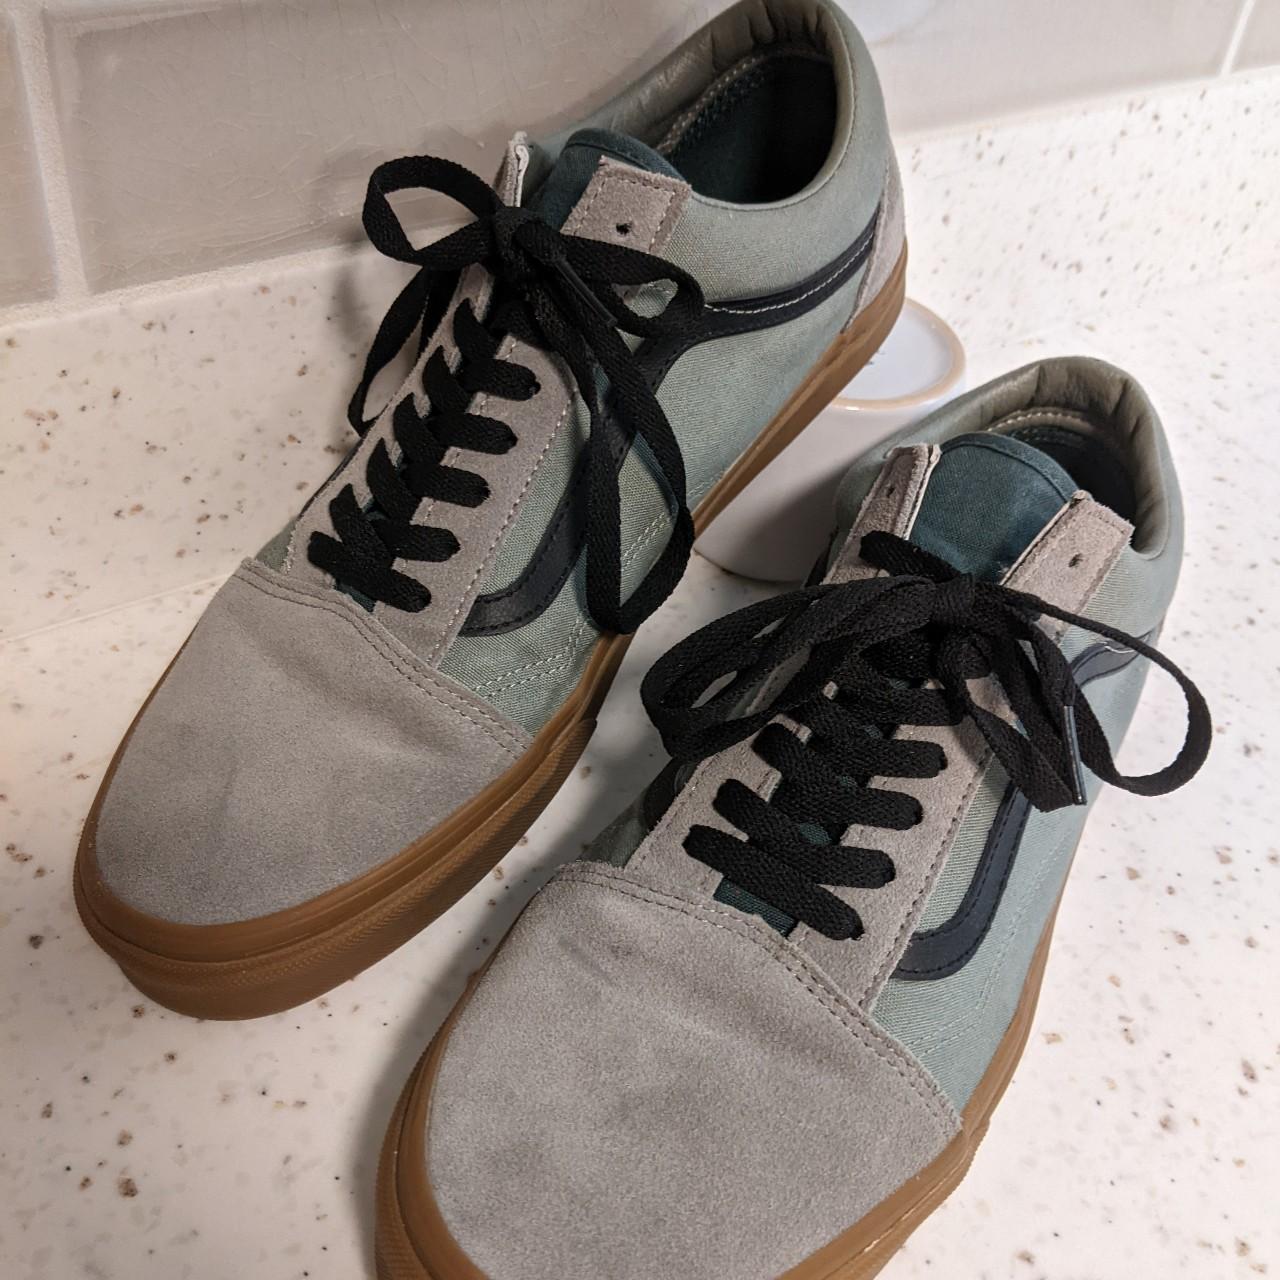 Vans Old Skool - Grey/Green/Gum sole shoes, Size... - Depop